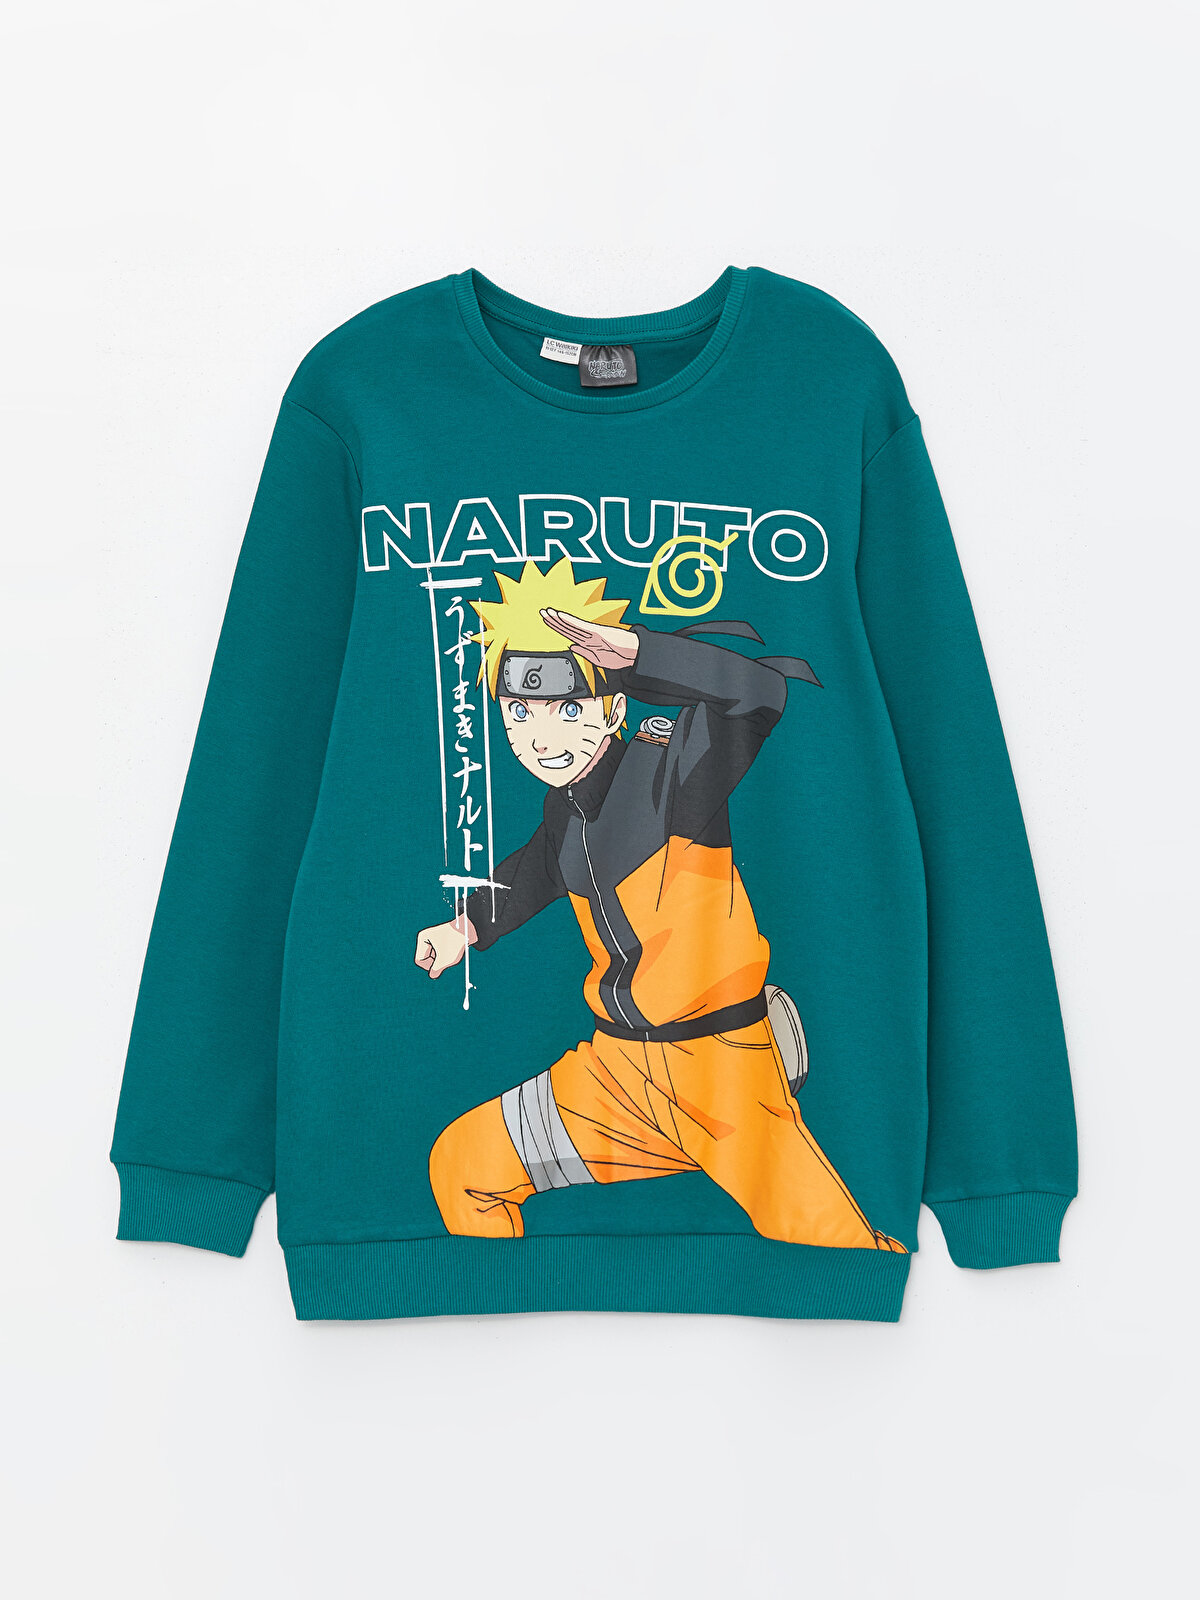 Crew Neck Naruto Printed Long Sleeve Baby Boy T-Shirt 